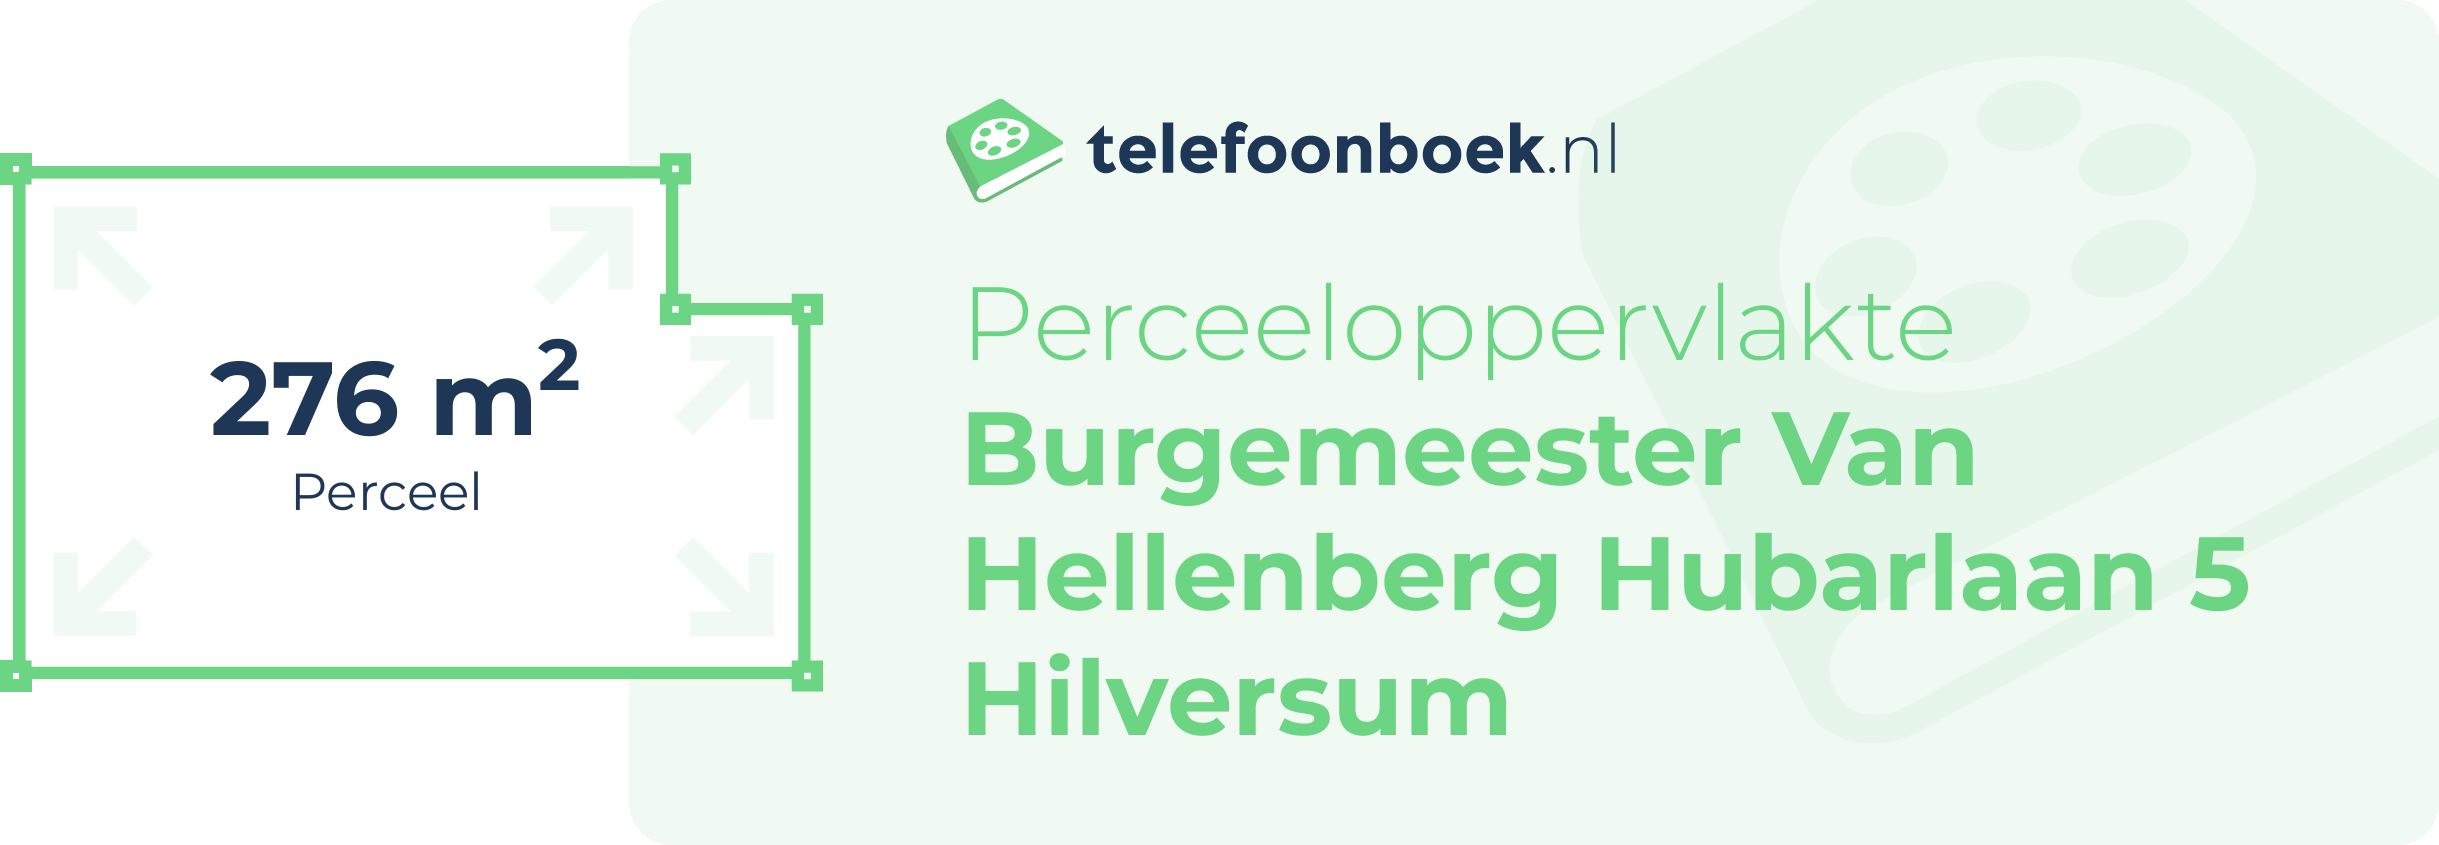 Perceeloppervlakte Burgemeester Van Hellenberg Hubarlaan 5 Hilversum